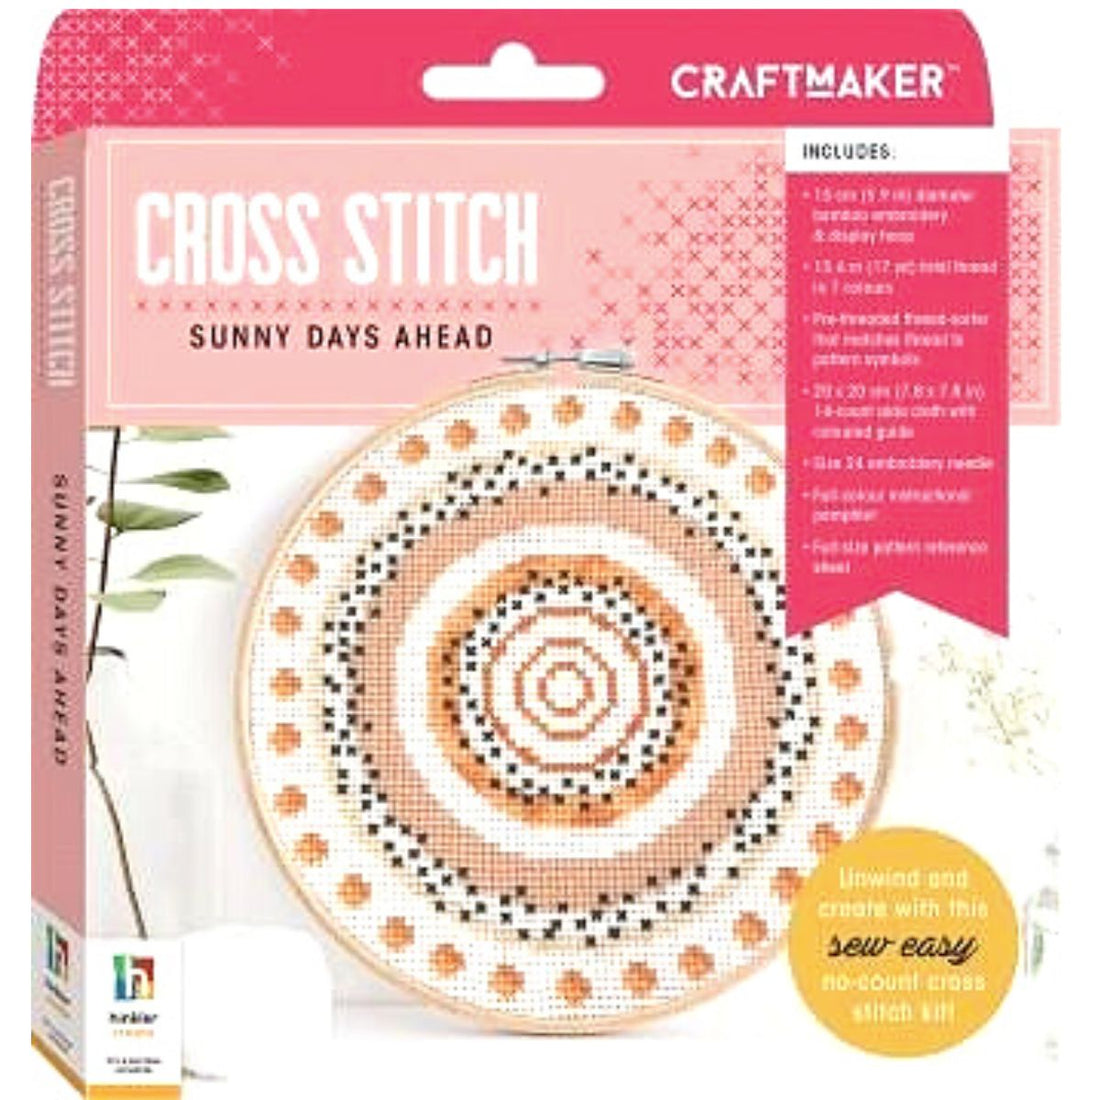 Craft Maker Cross-stitch Kit: Sunny Days Ahead